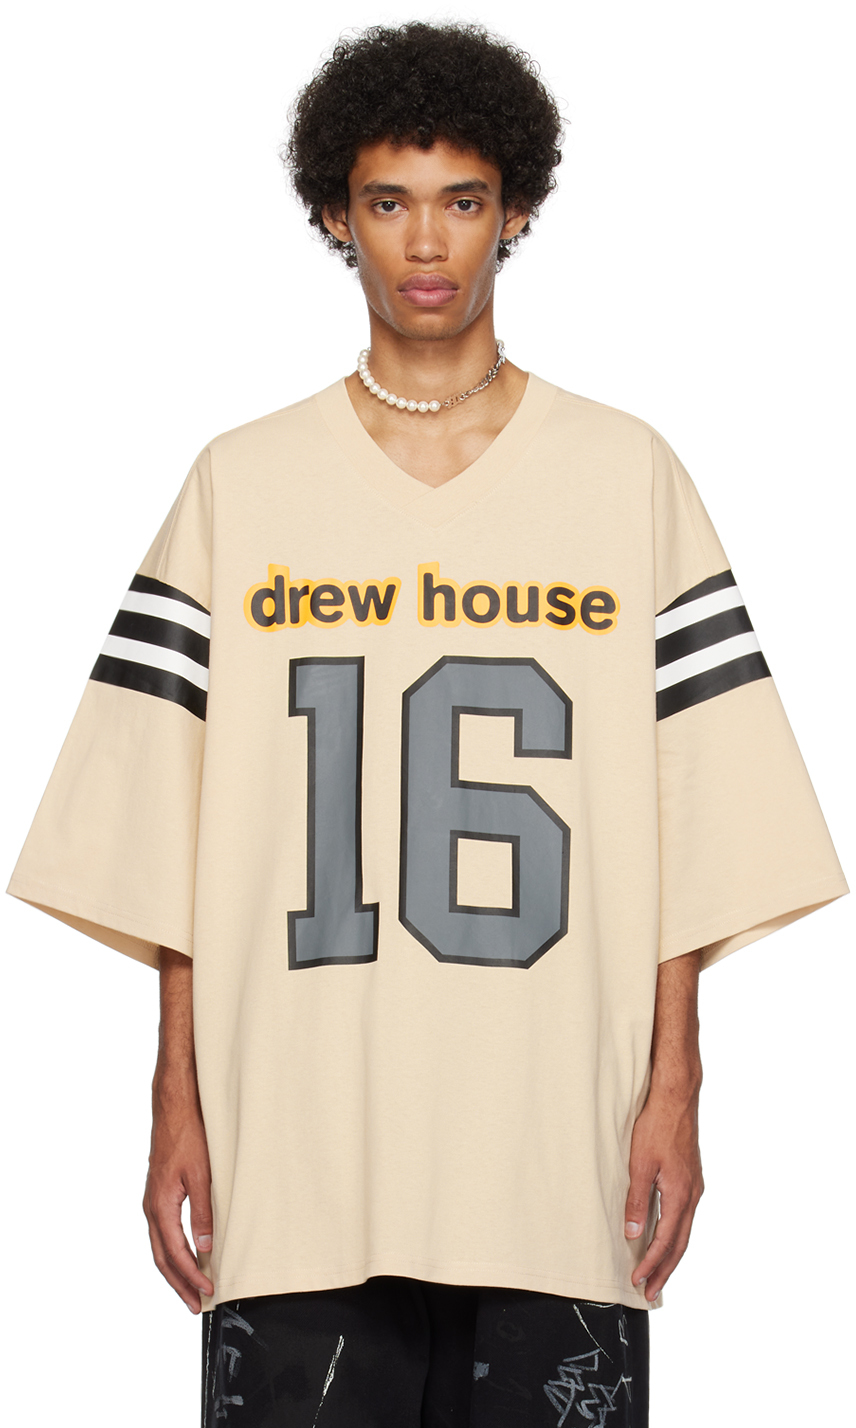 drew house Beige Printed T-Shirt